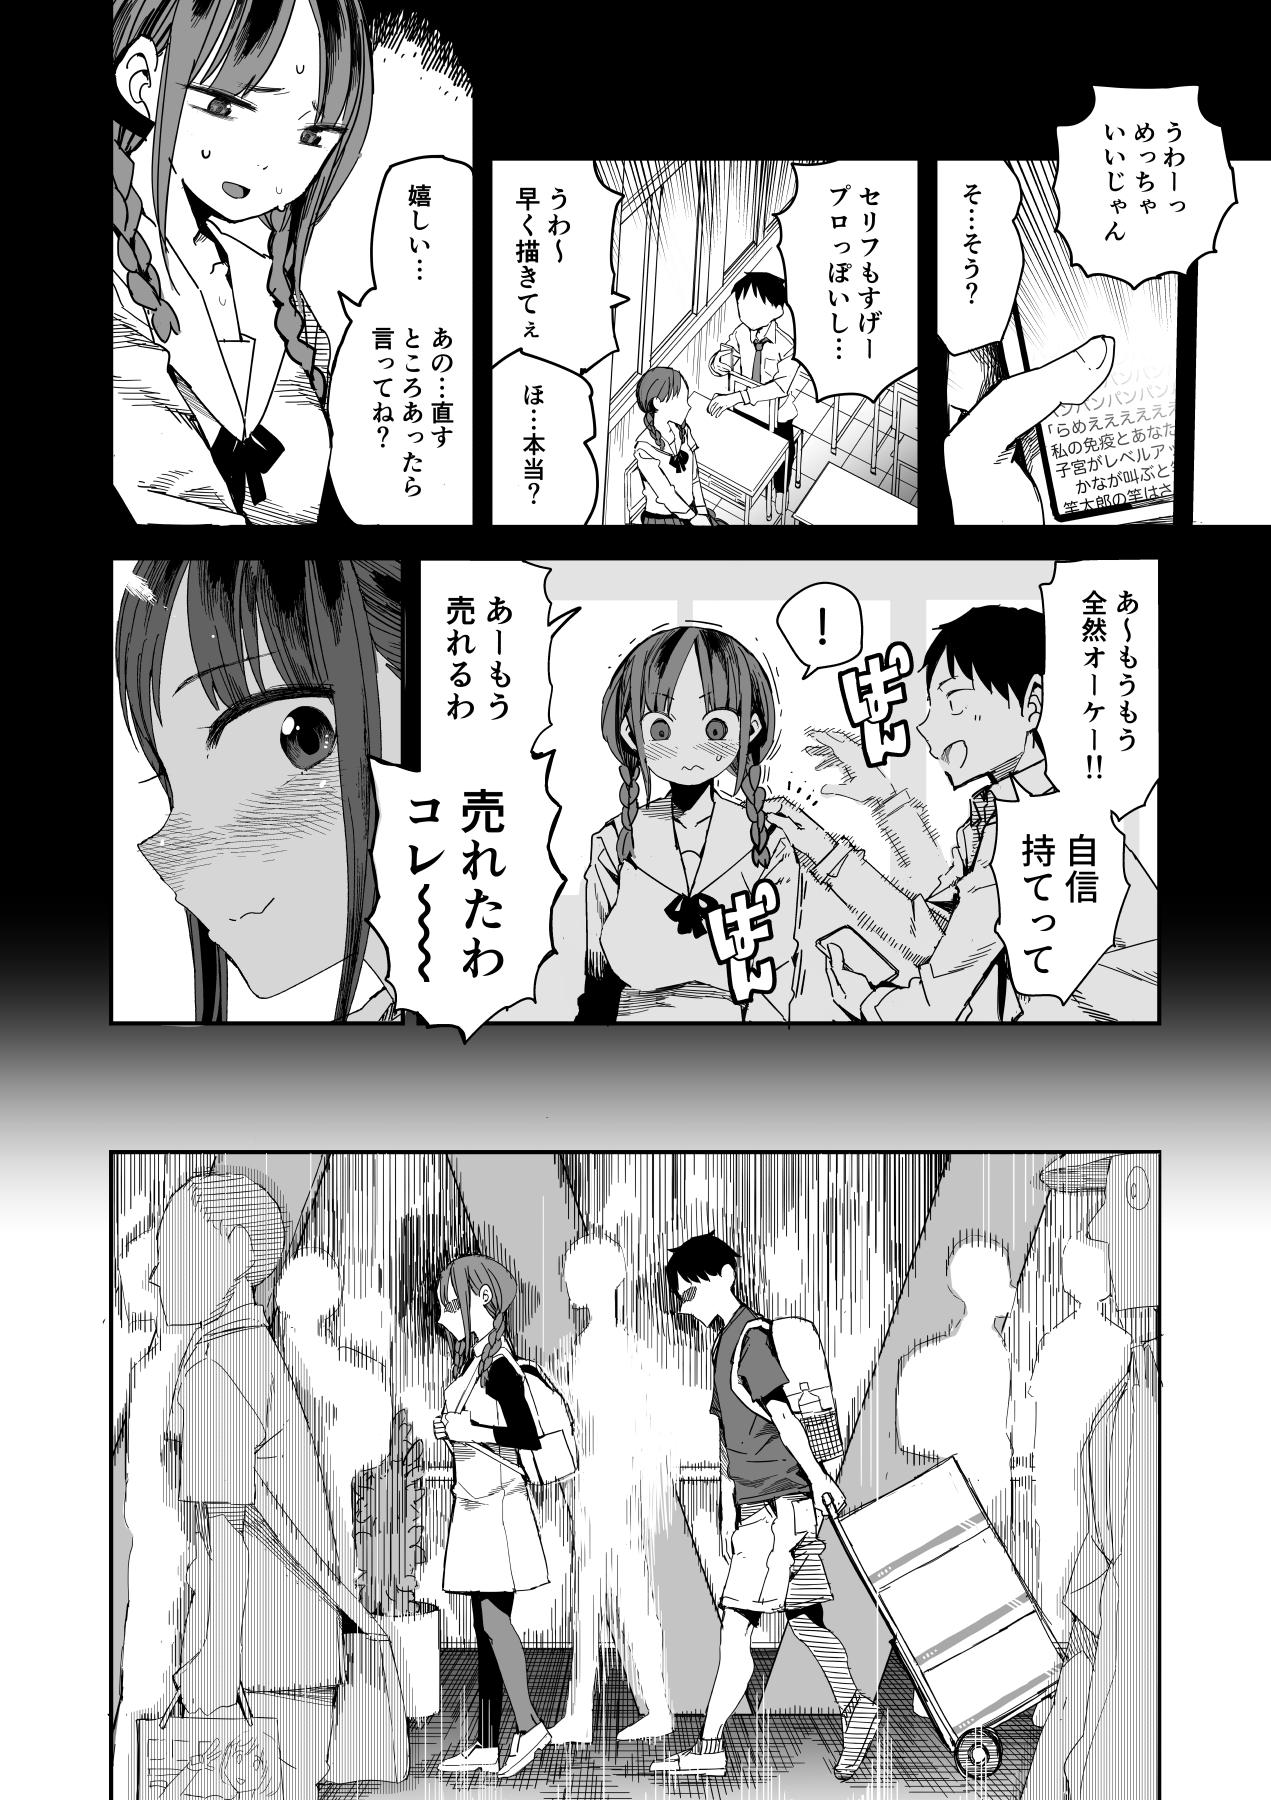 Couples "Kanbai Shimashita" - Original 18 Year Old - Page 6